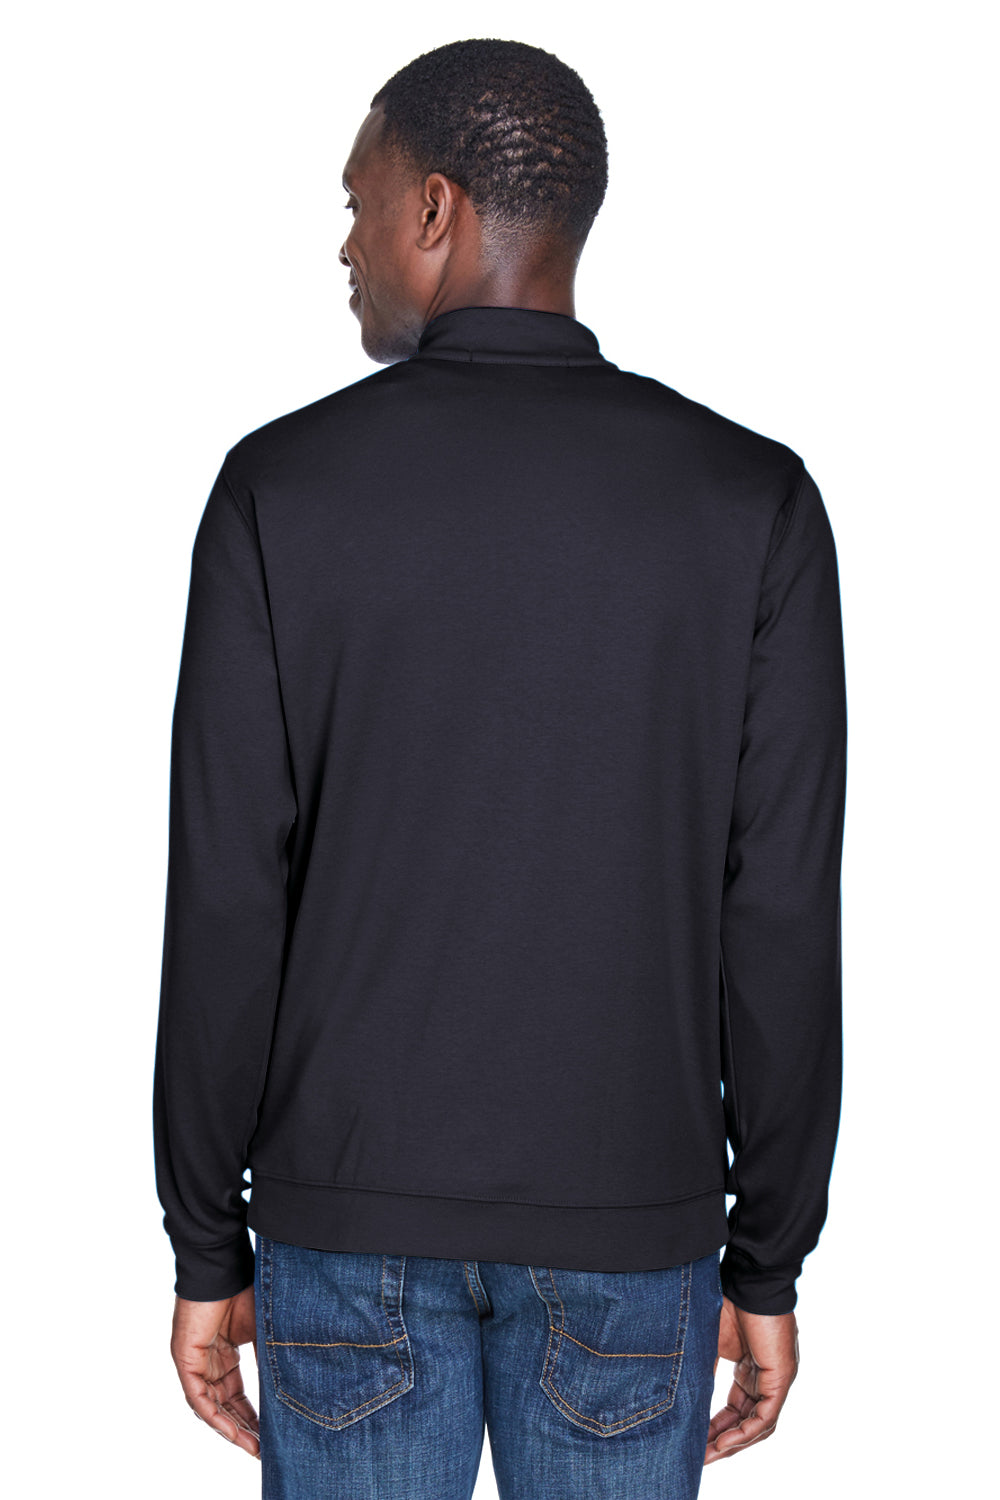 Devon & Jones DG479 Mens DryTec20 Performance Moisture Wicking 1/4 Zip Sweatshirt Black Back